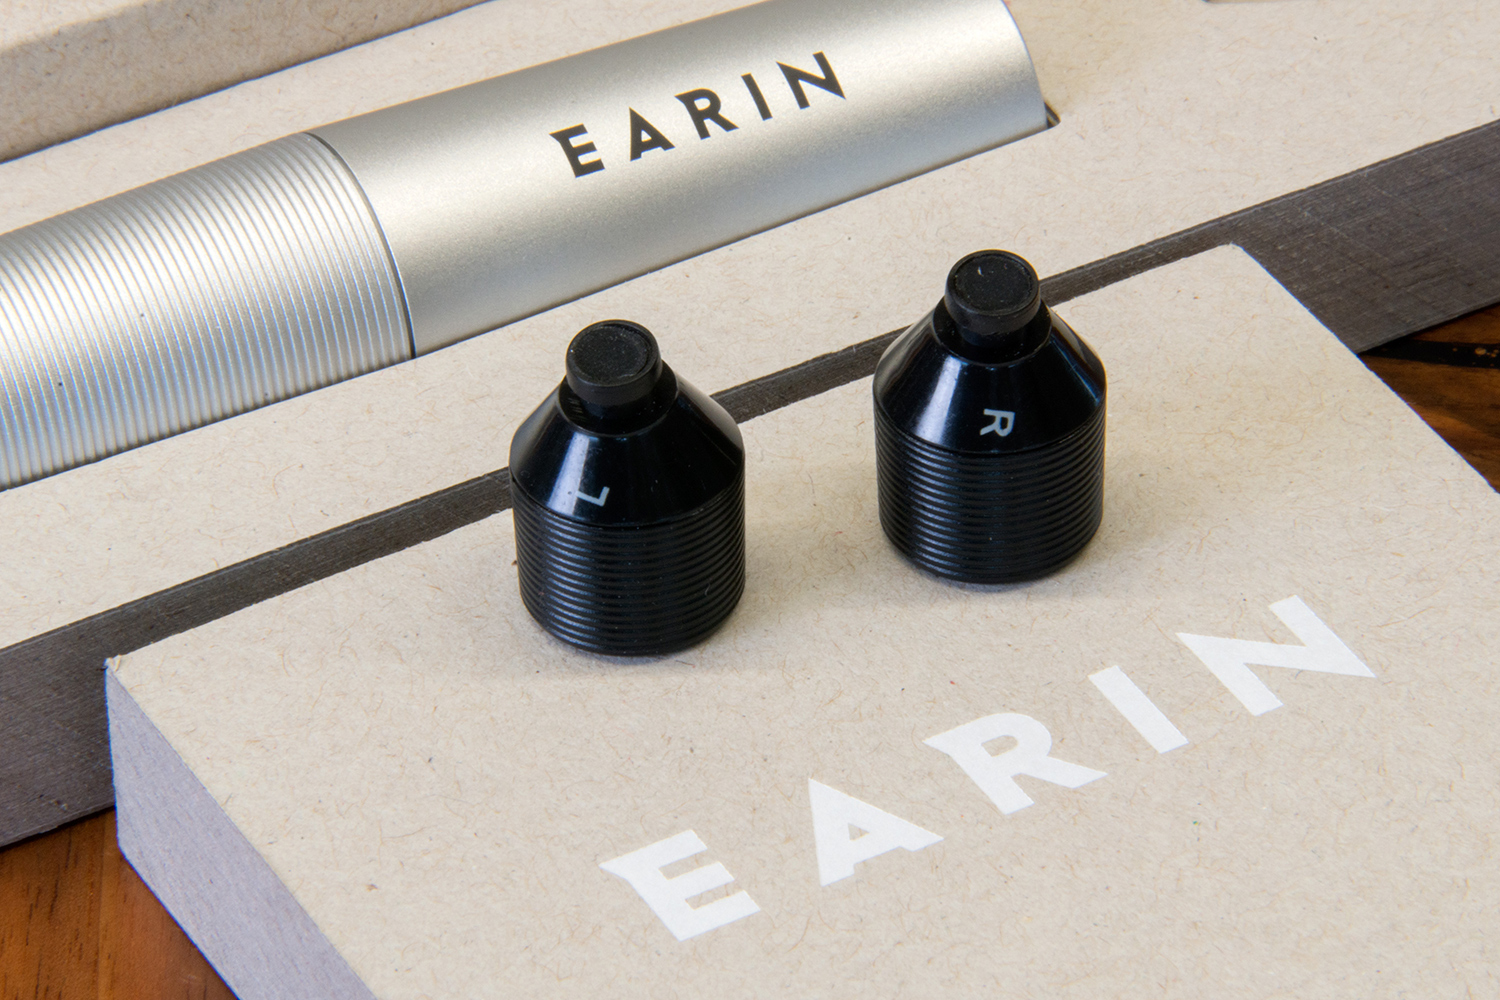 earin wireless earbuds hands on review video bt hero3